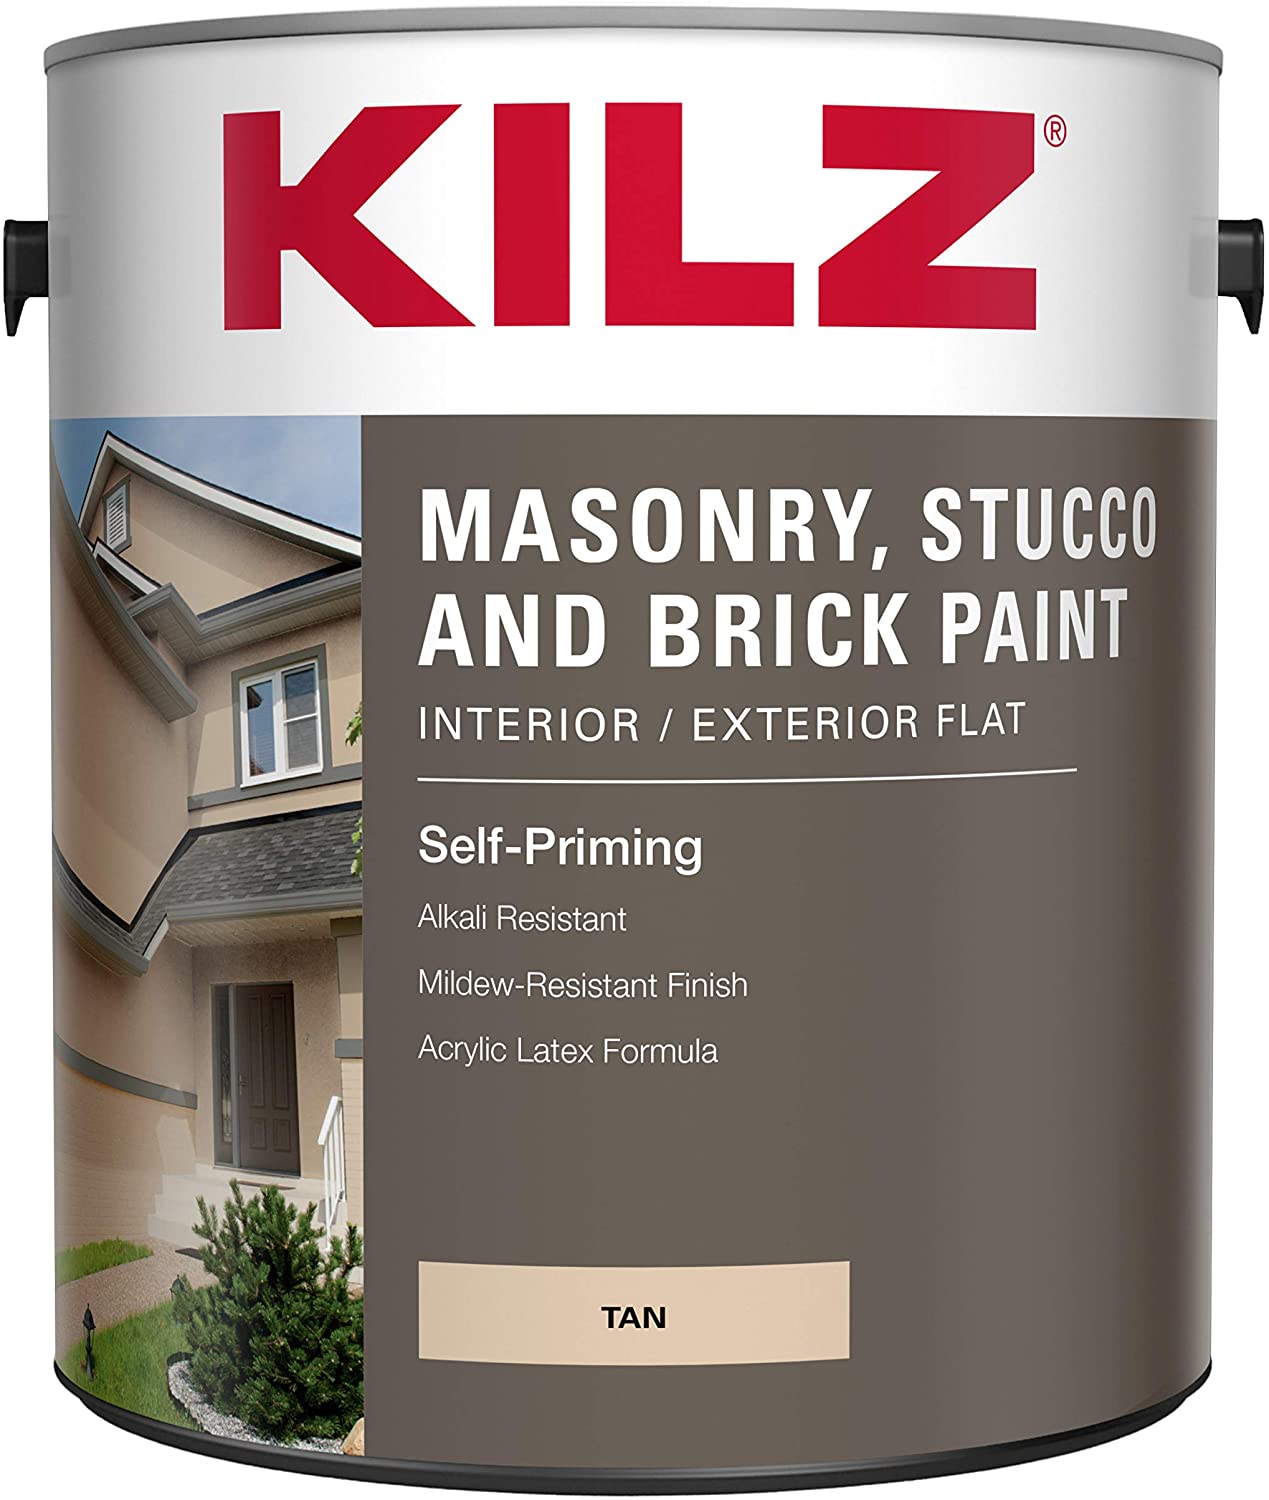 KILZ Interior Exterior Self-Priming Masonry, Stucco and Brick Flat Paint, 1 gallon, Tan